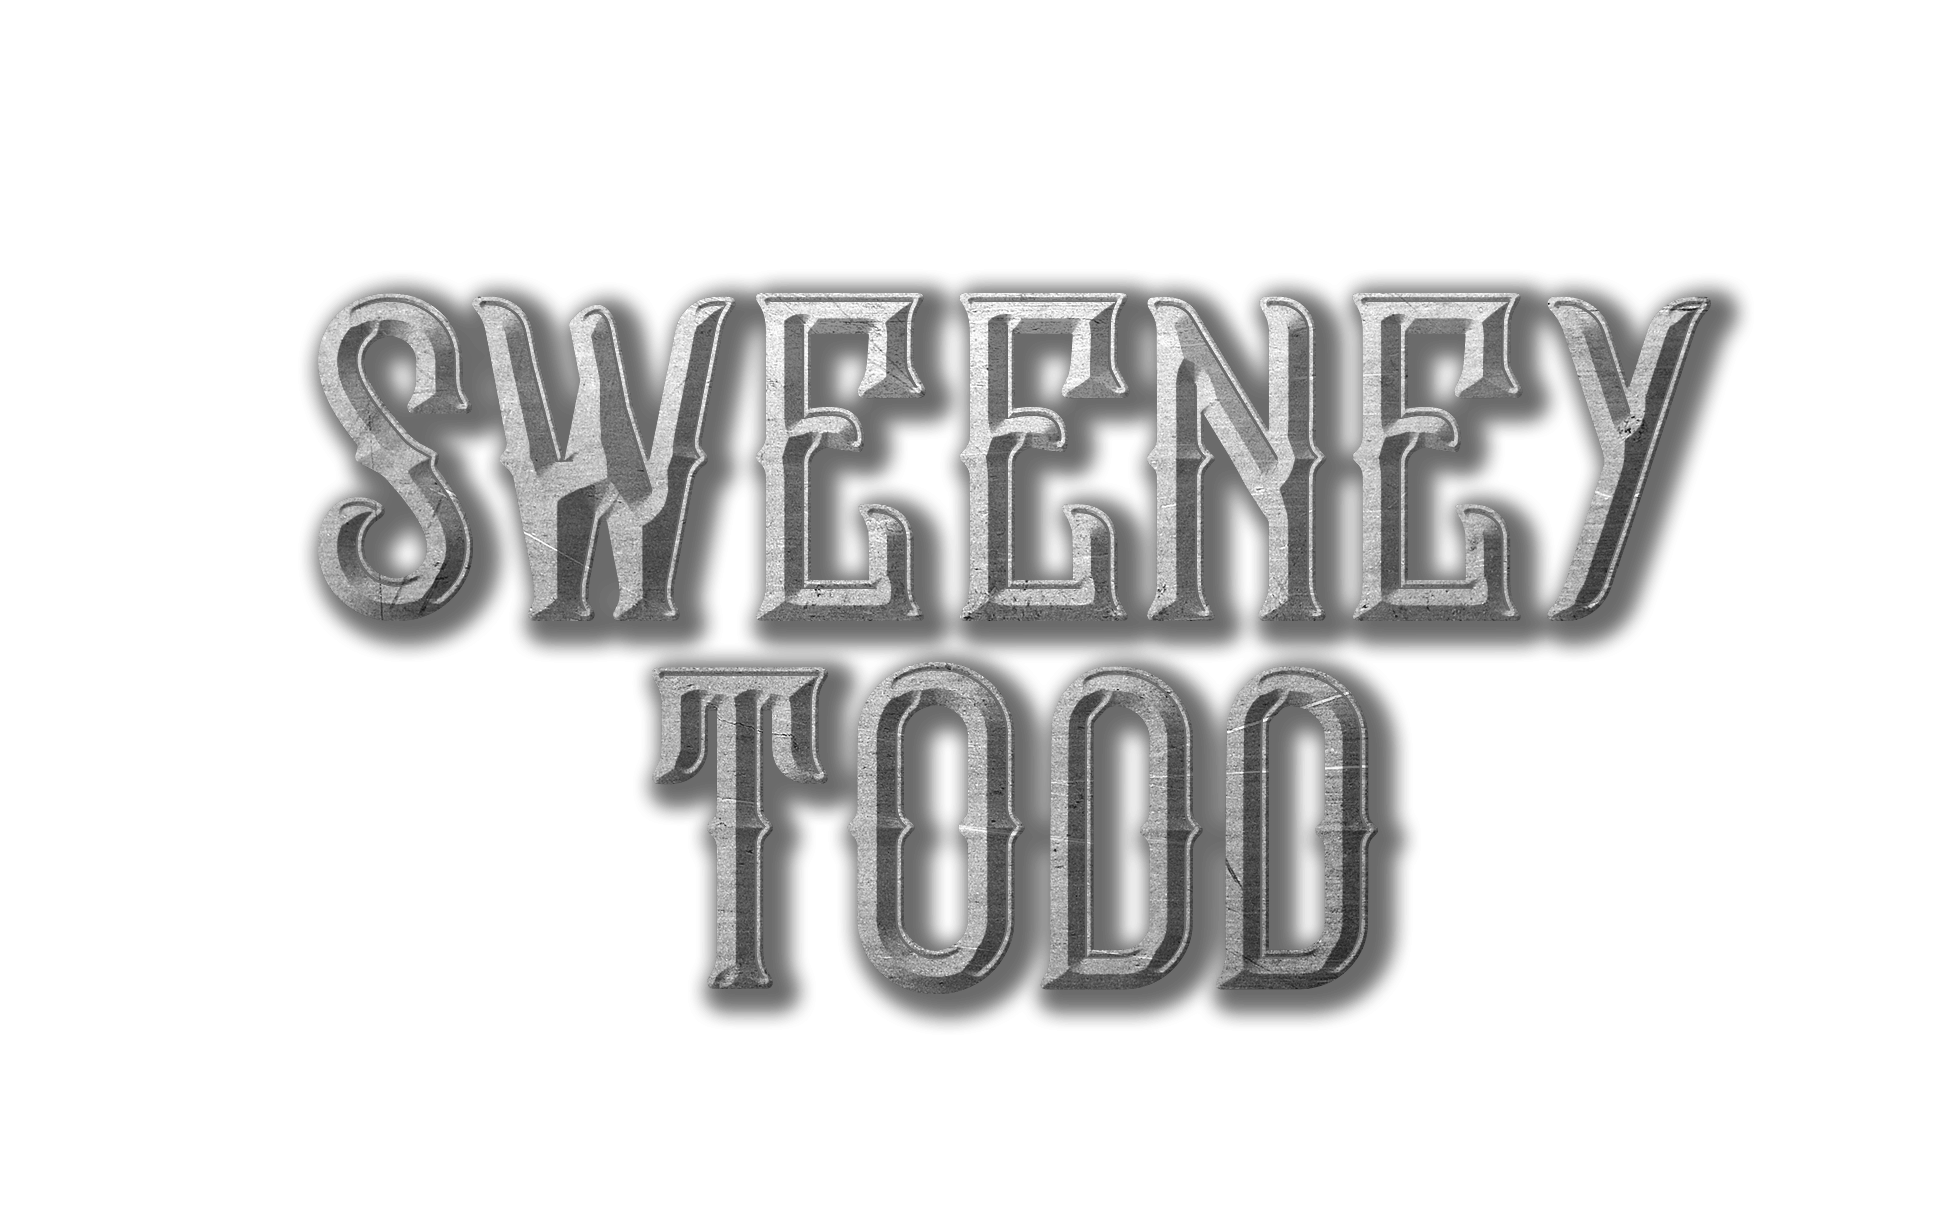 Todd Logo - Sweeney Todd Logo-BW - Hillbarn Theatre